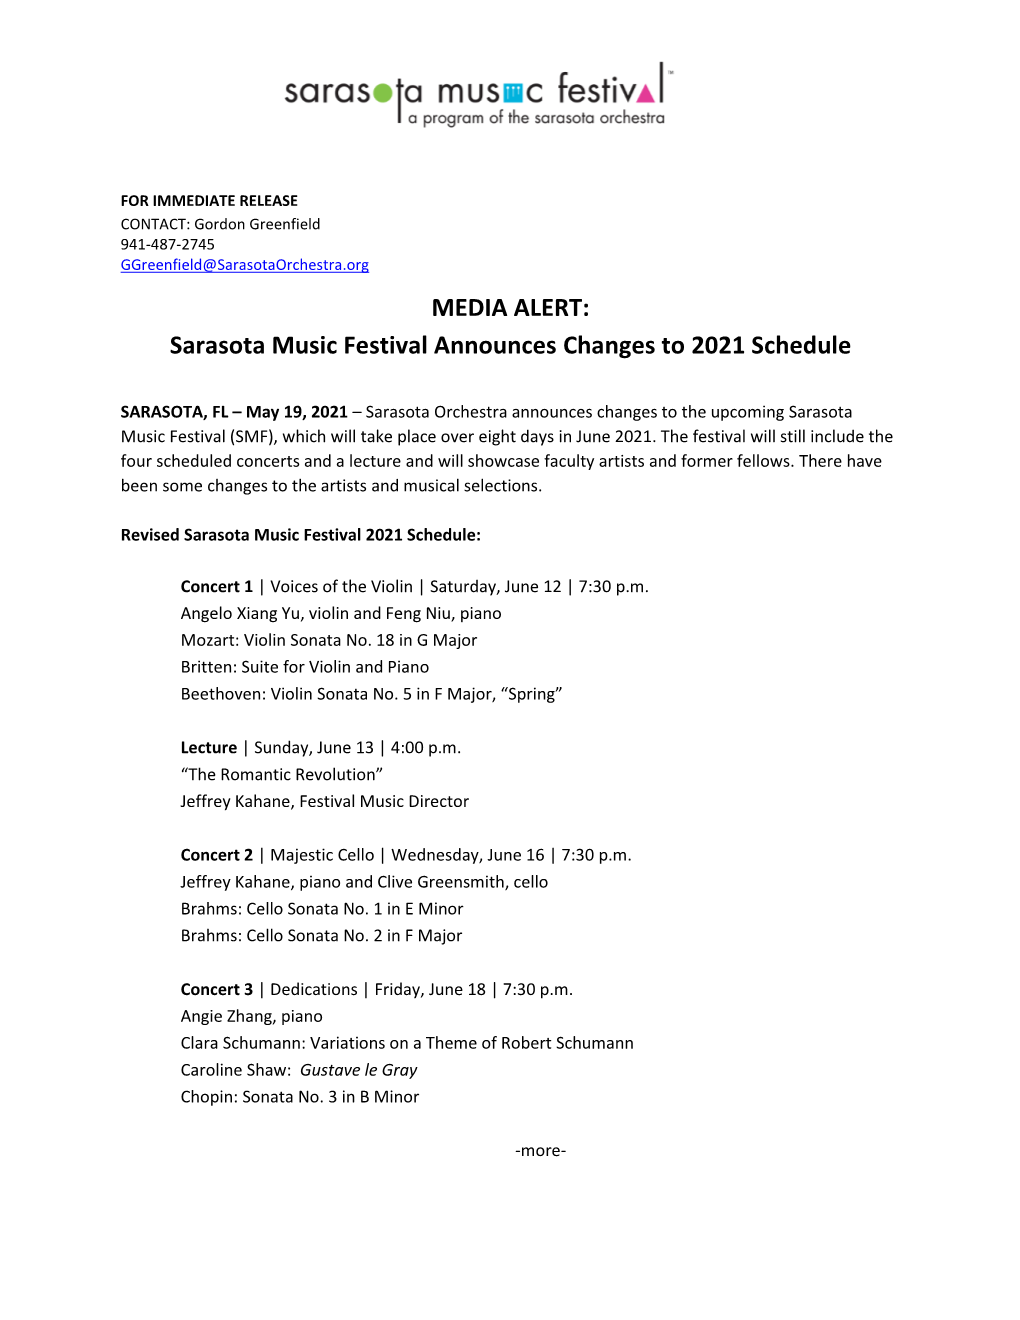 Sarasota Music Festival Announces Changes to 2021 Schedule